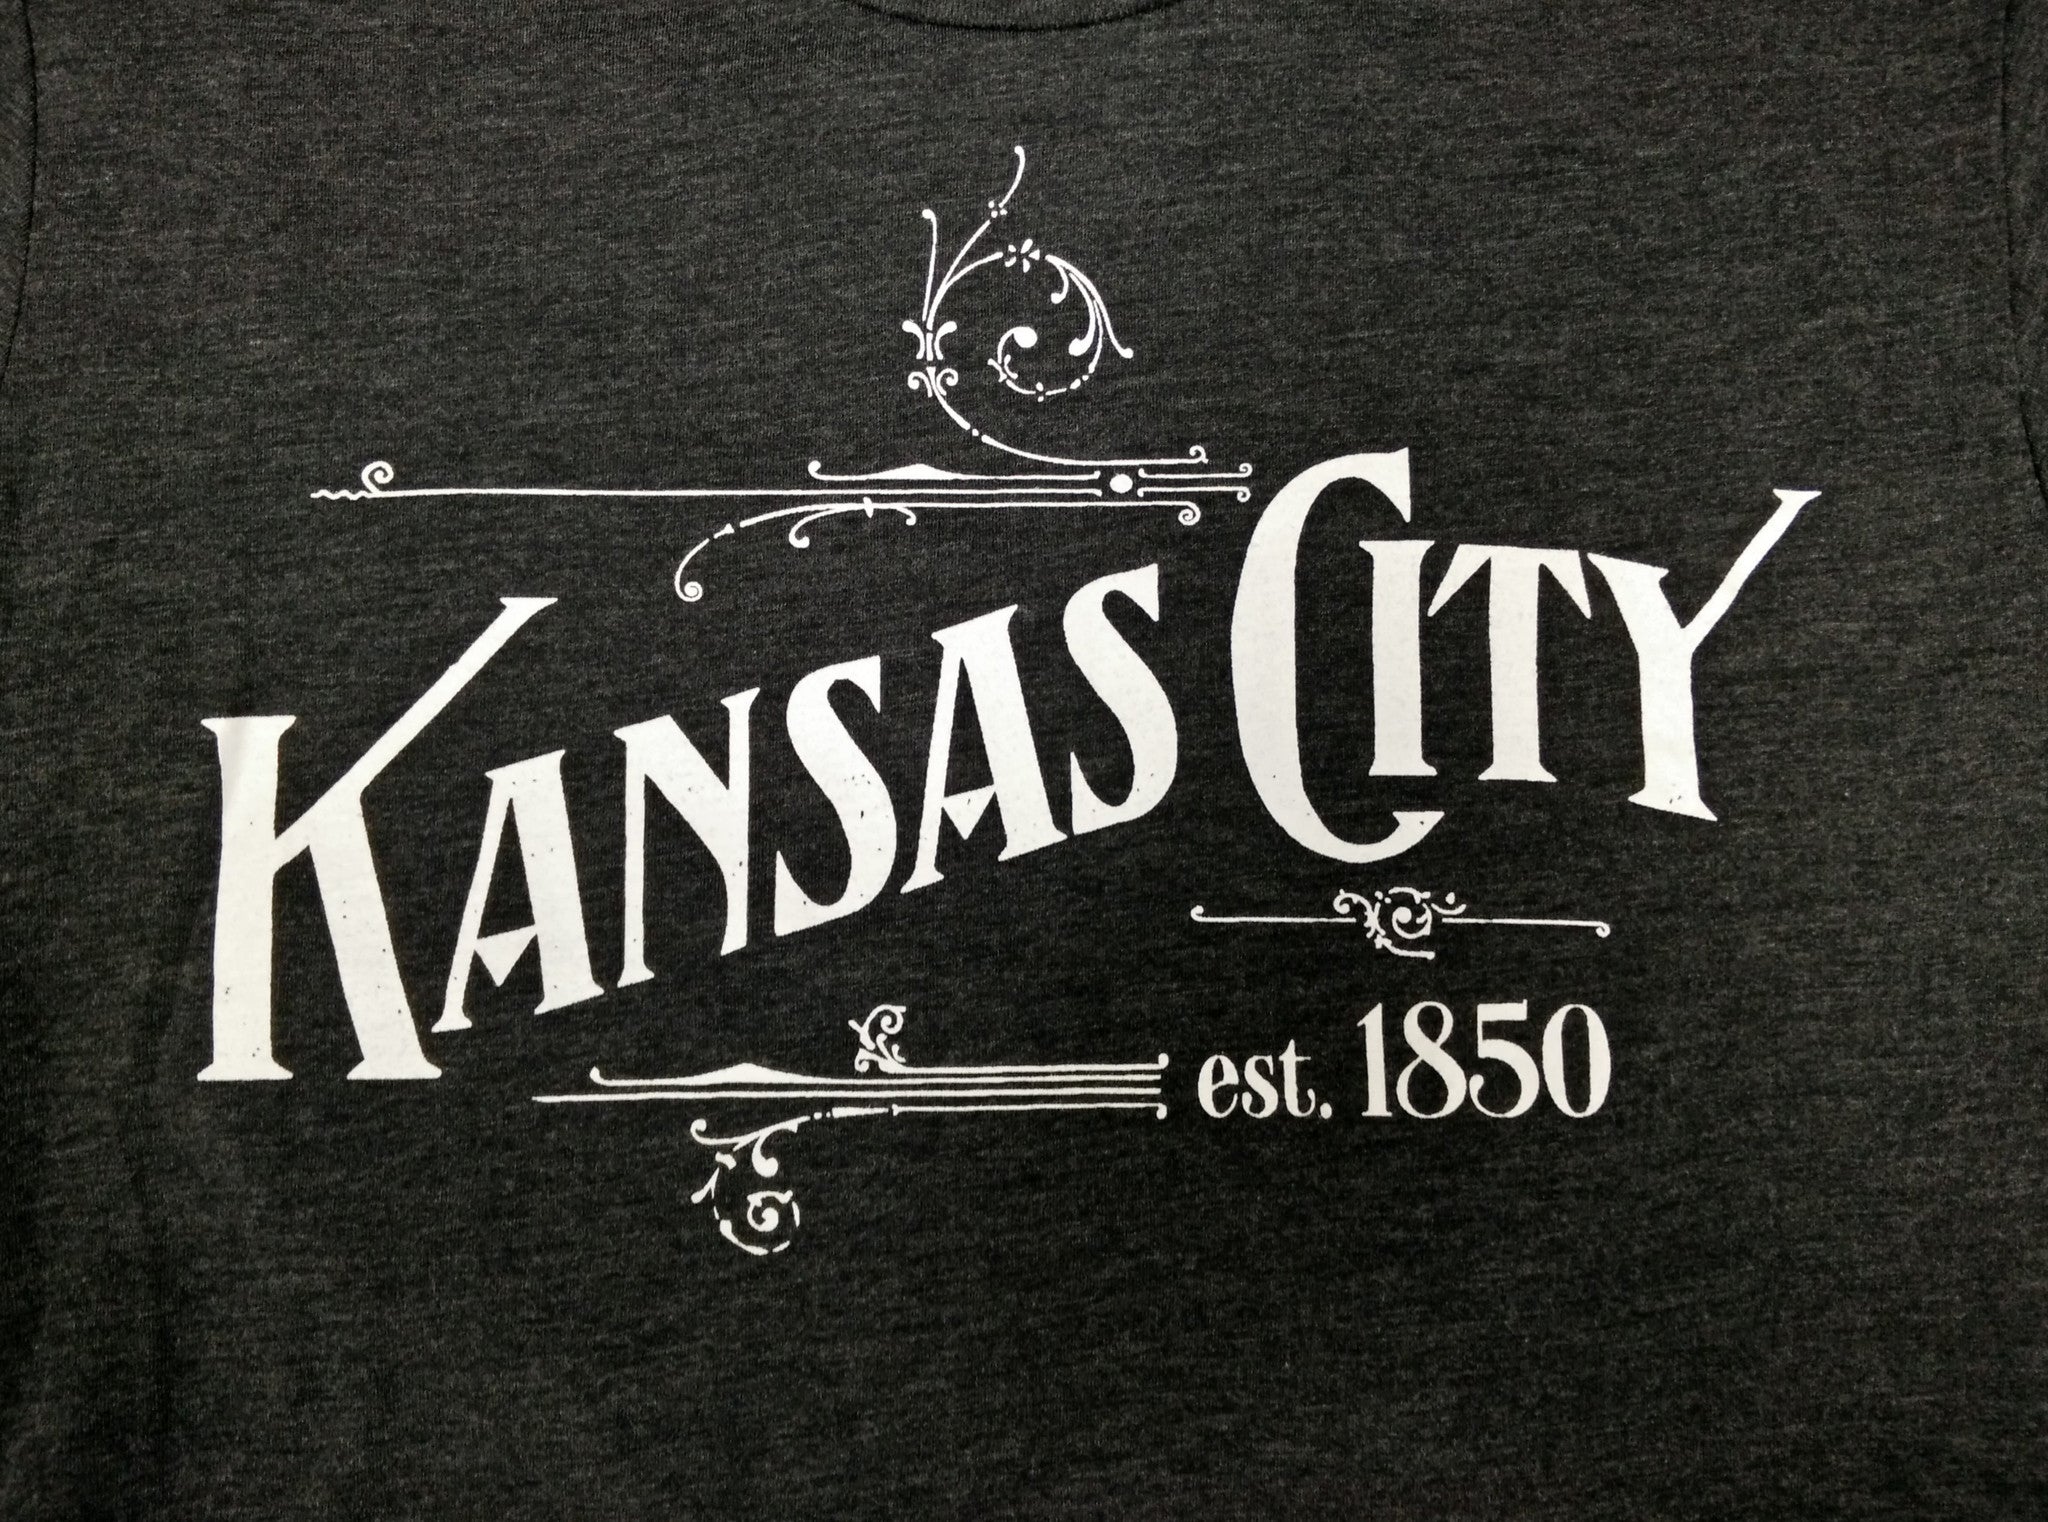 Kansas City T-Shirt   The Kansas City ...